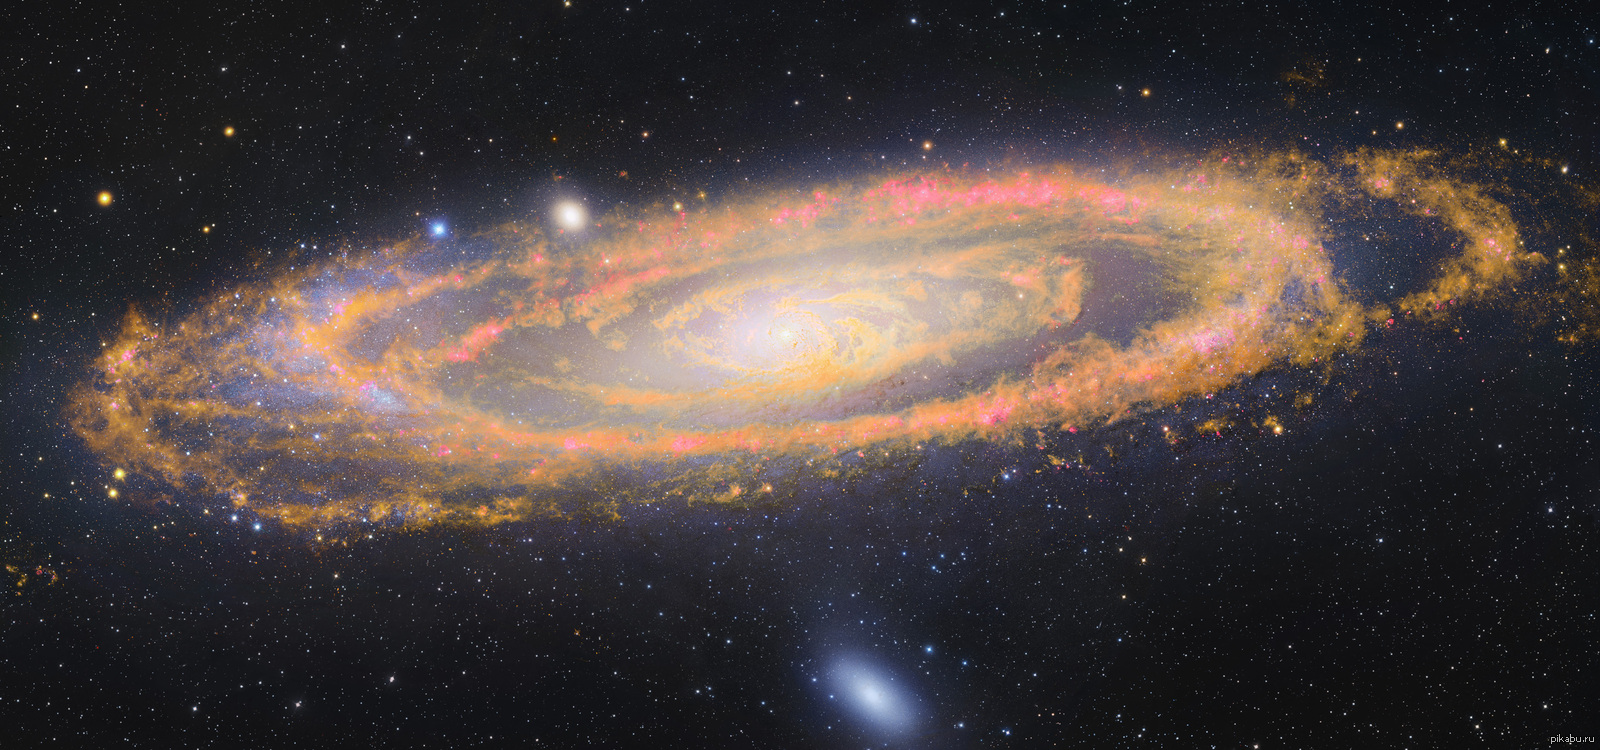 Https m 31. М31 Андромеда. Туманность Андромеды Галактика. Туманность Андромеды m31. Спиральная Галактика m31.